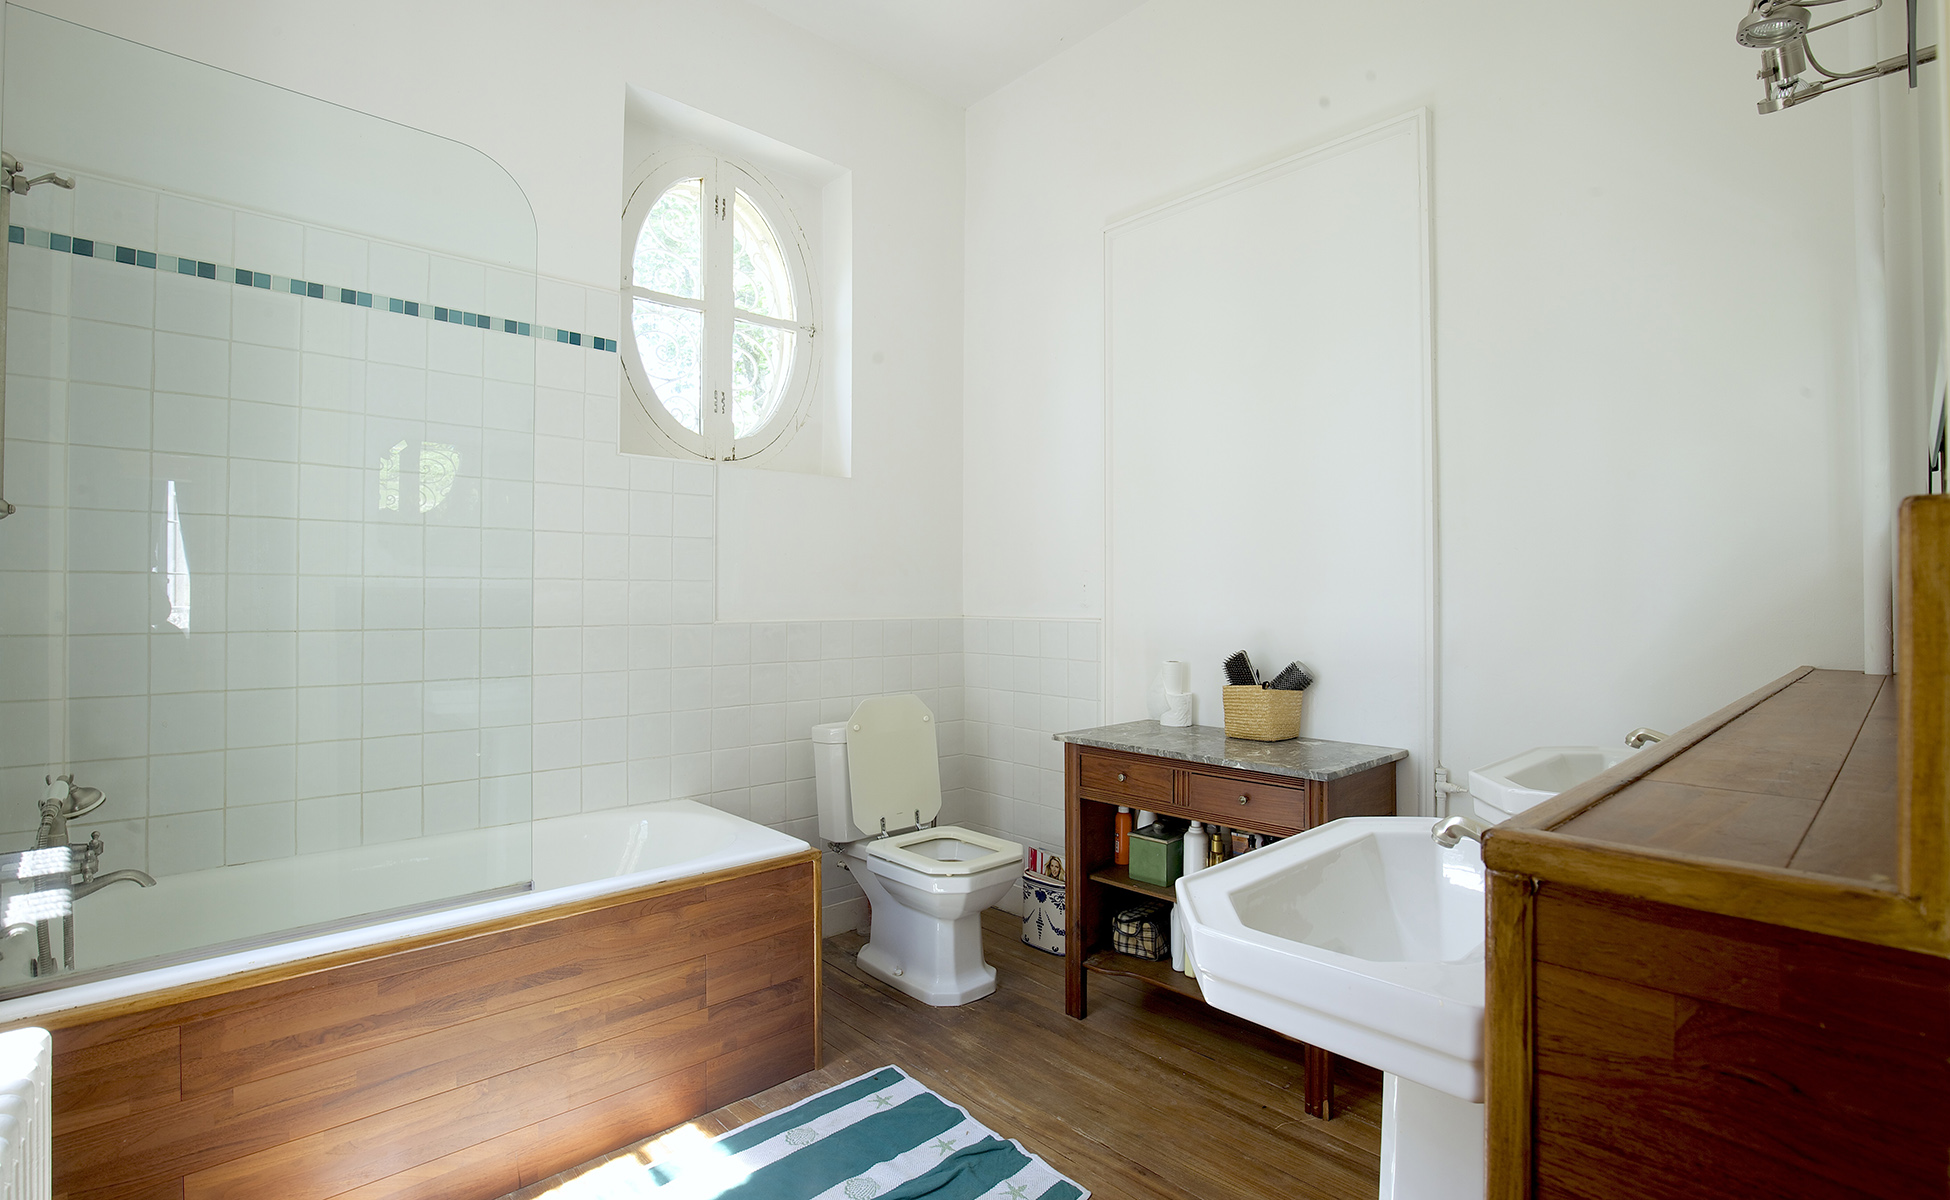 Lovelydays luxury service apartment rental - Libourne - Chateau de JUNAYME - Lovelysuite - 7 bedrooms - 6 bathrooms - Large bathtub - 60dd2ff4198e - Lovelydays